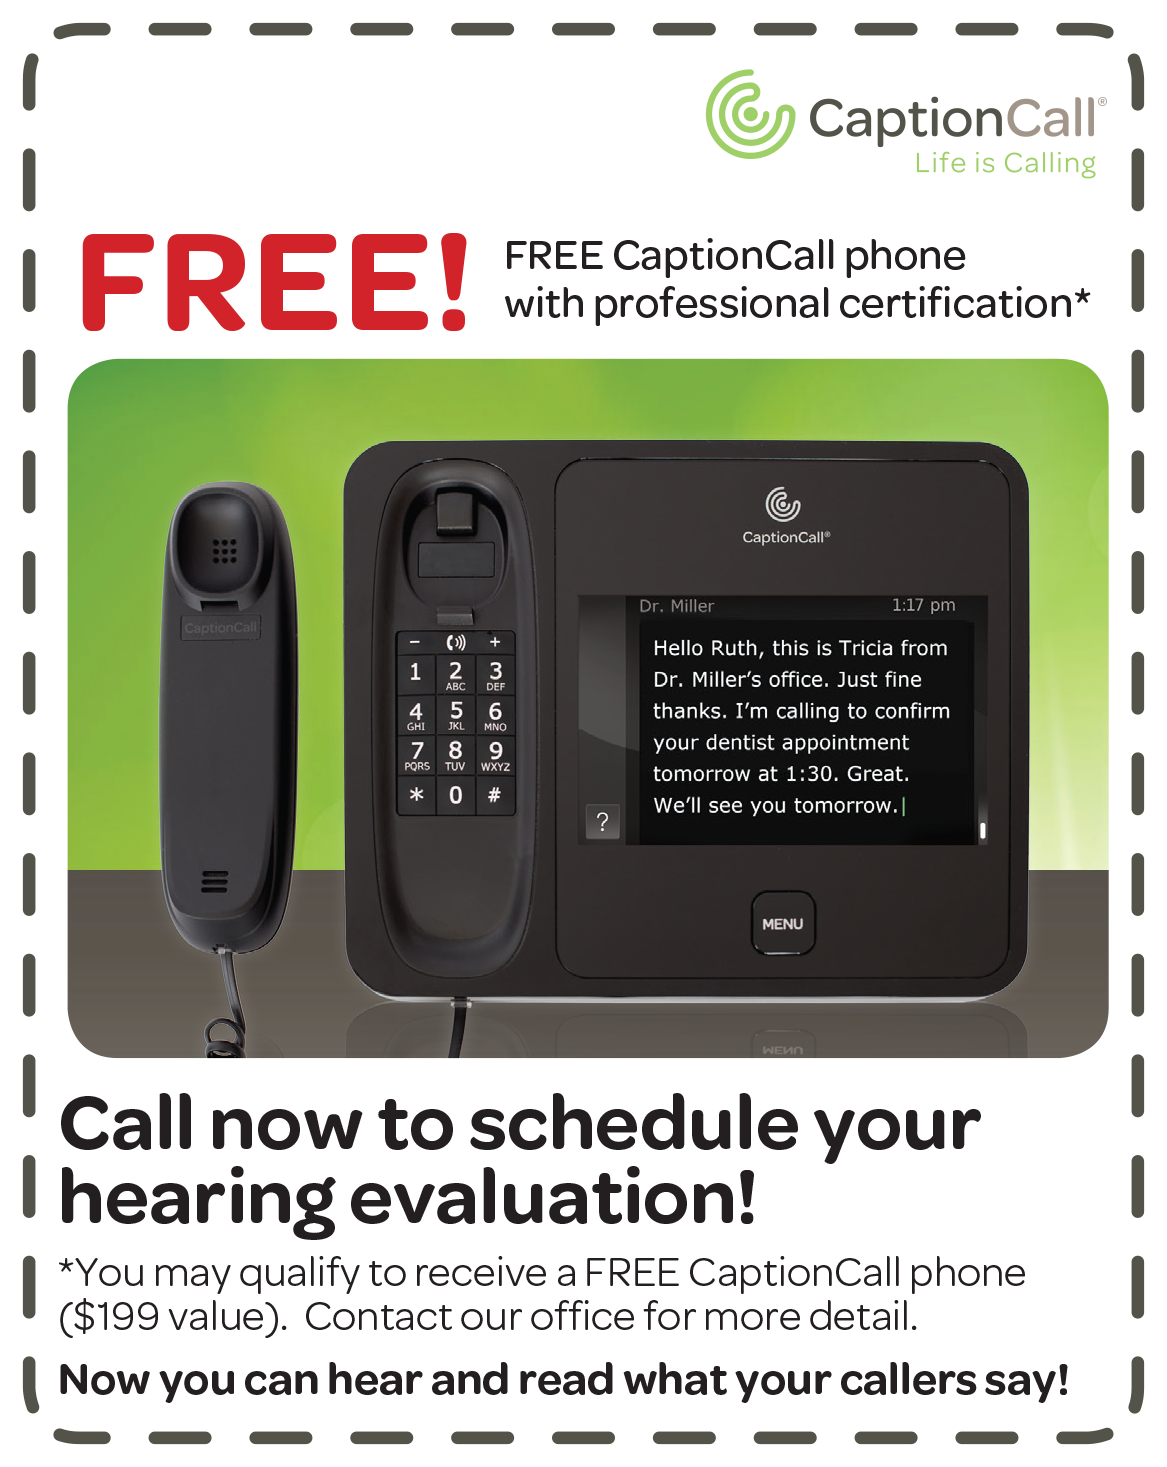 Free CaptionCall phone* logo